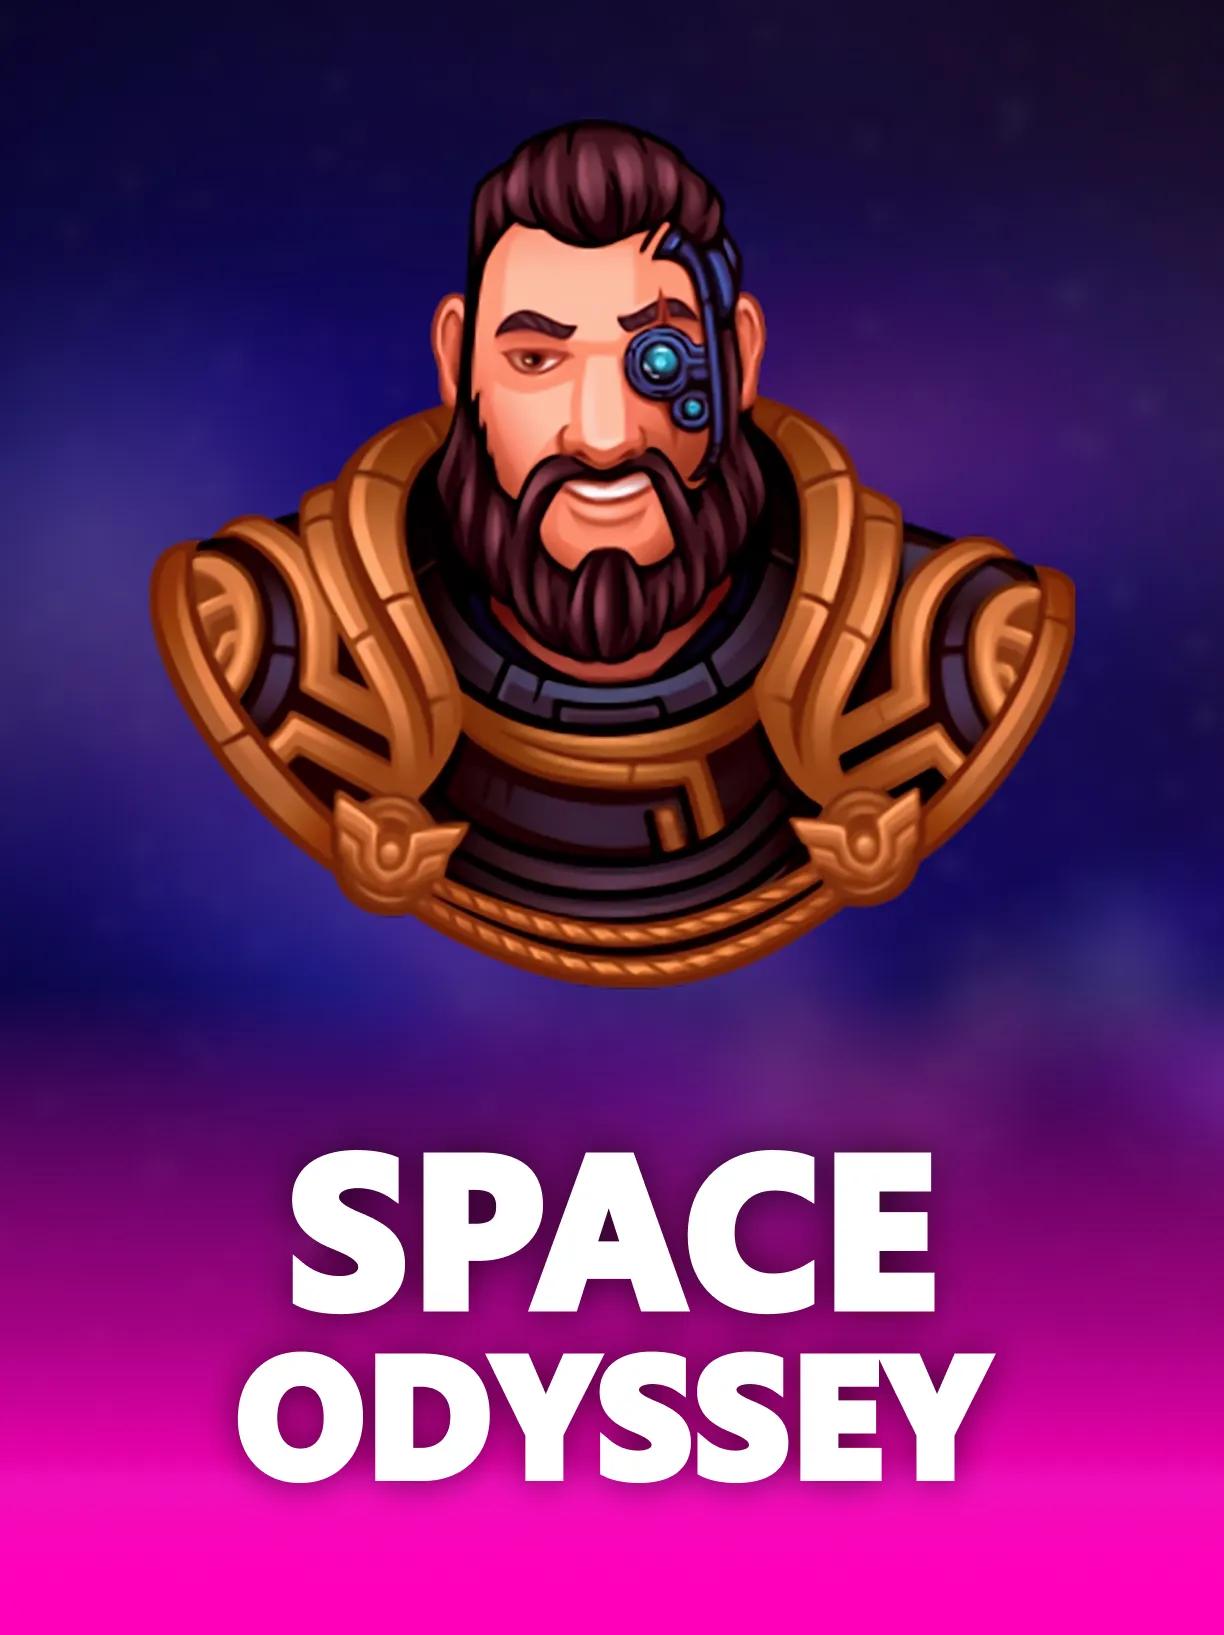 ug_Space_Odyssey_square.webp